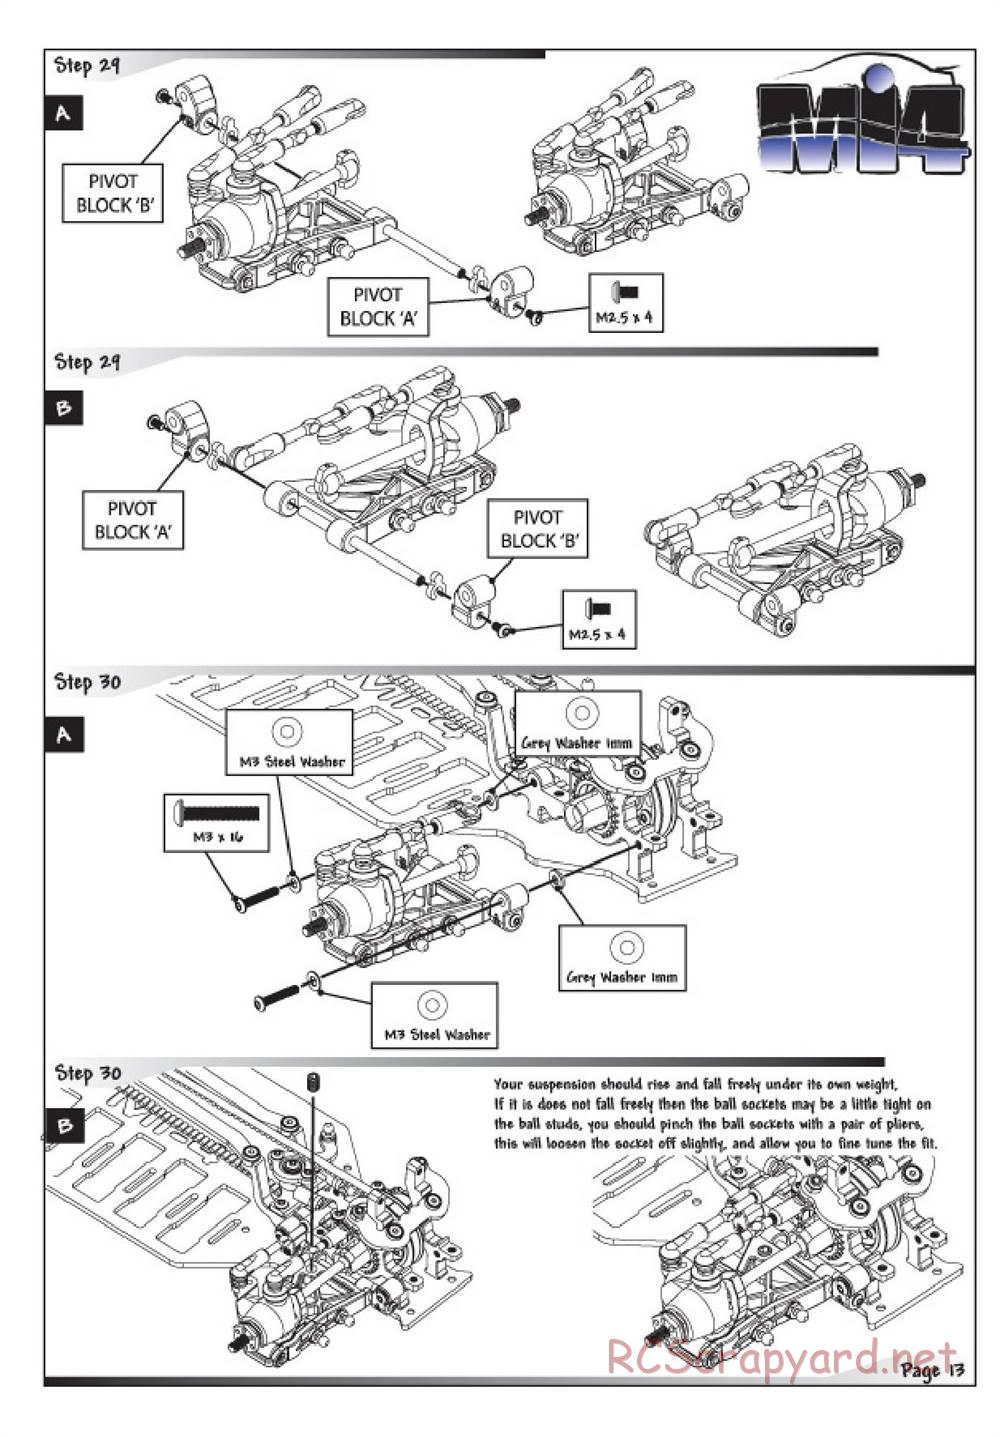 Schumacher - Mi4 - Manual - Page 15